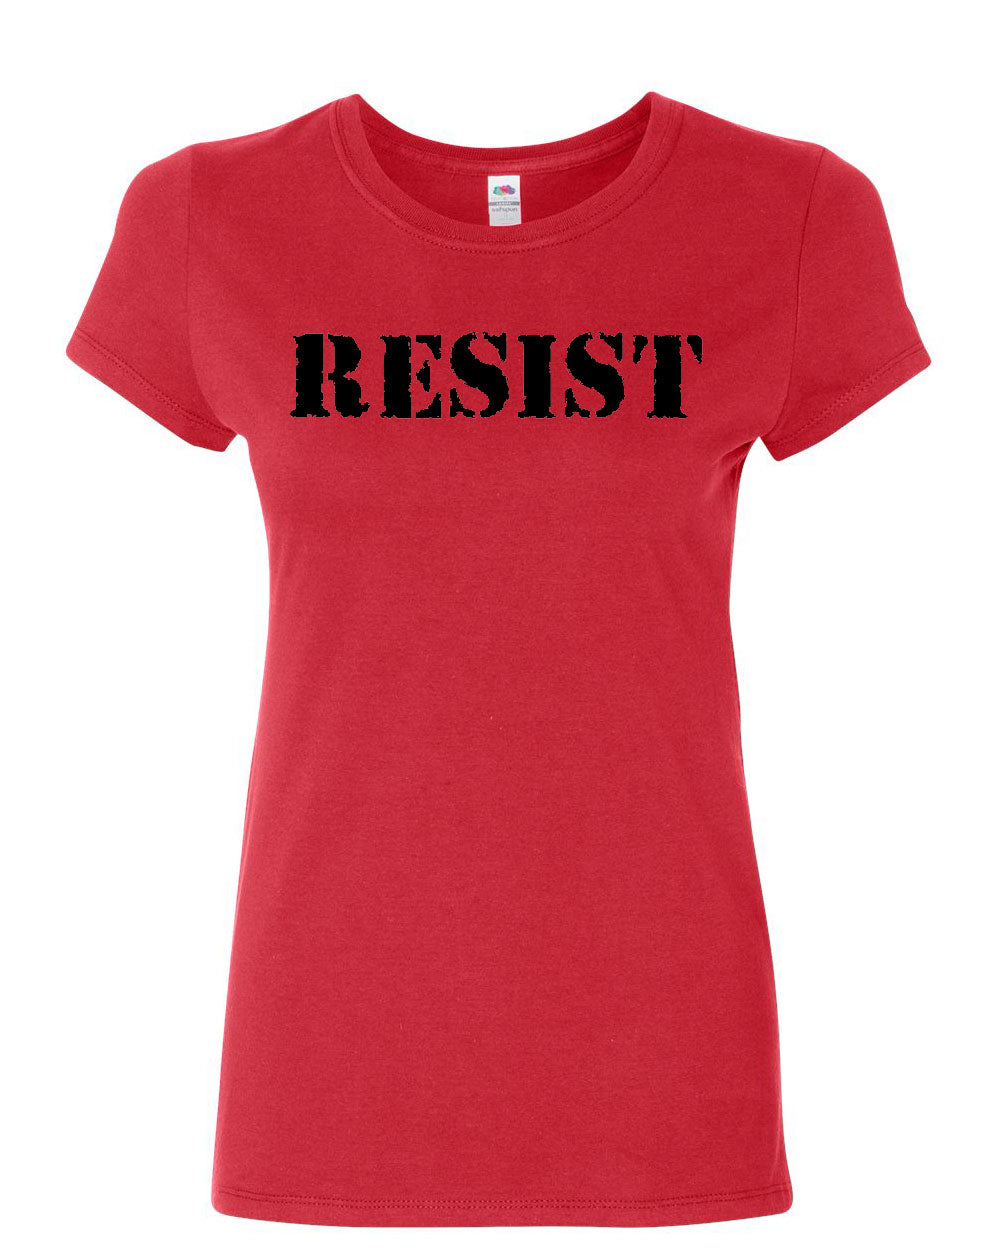 Resist Women's T-Shirt Political Anti-Trump Protest Rebel Impeach Fight ...